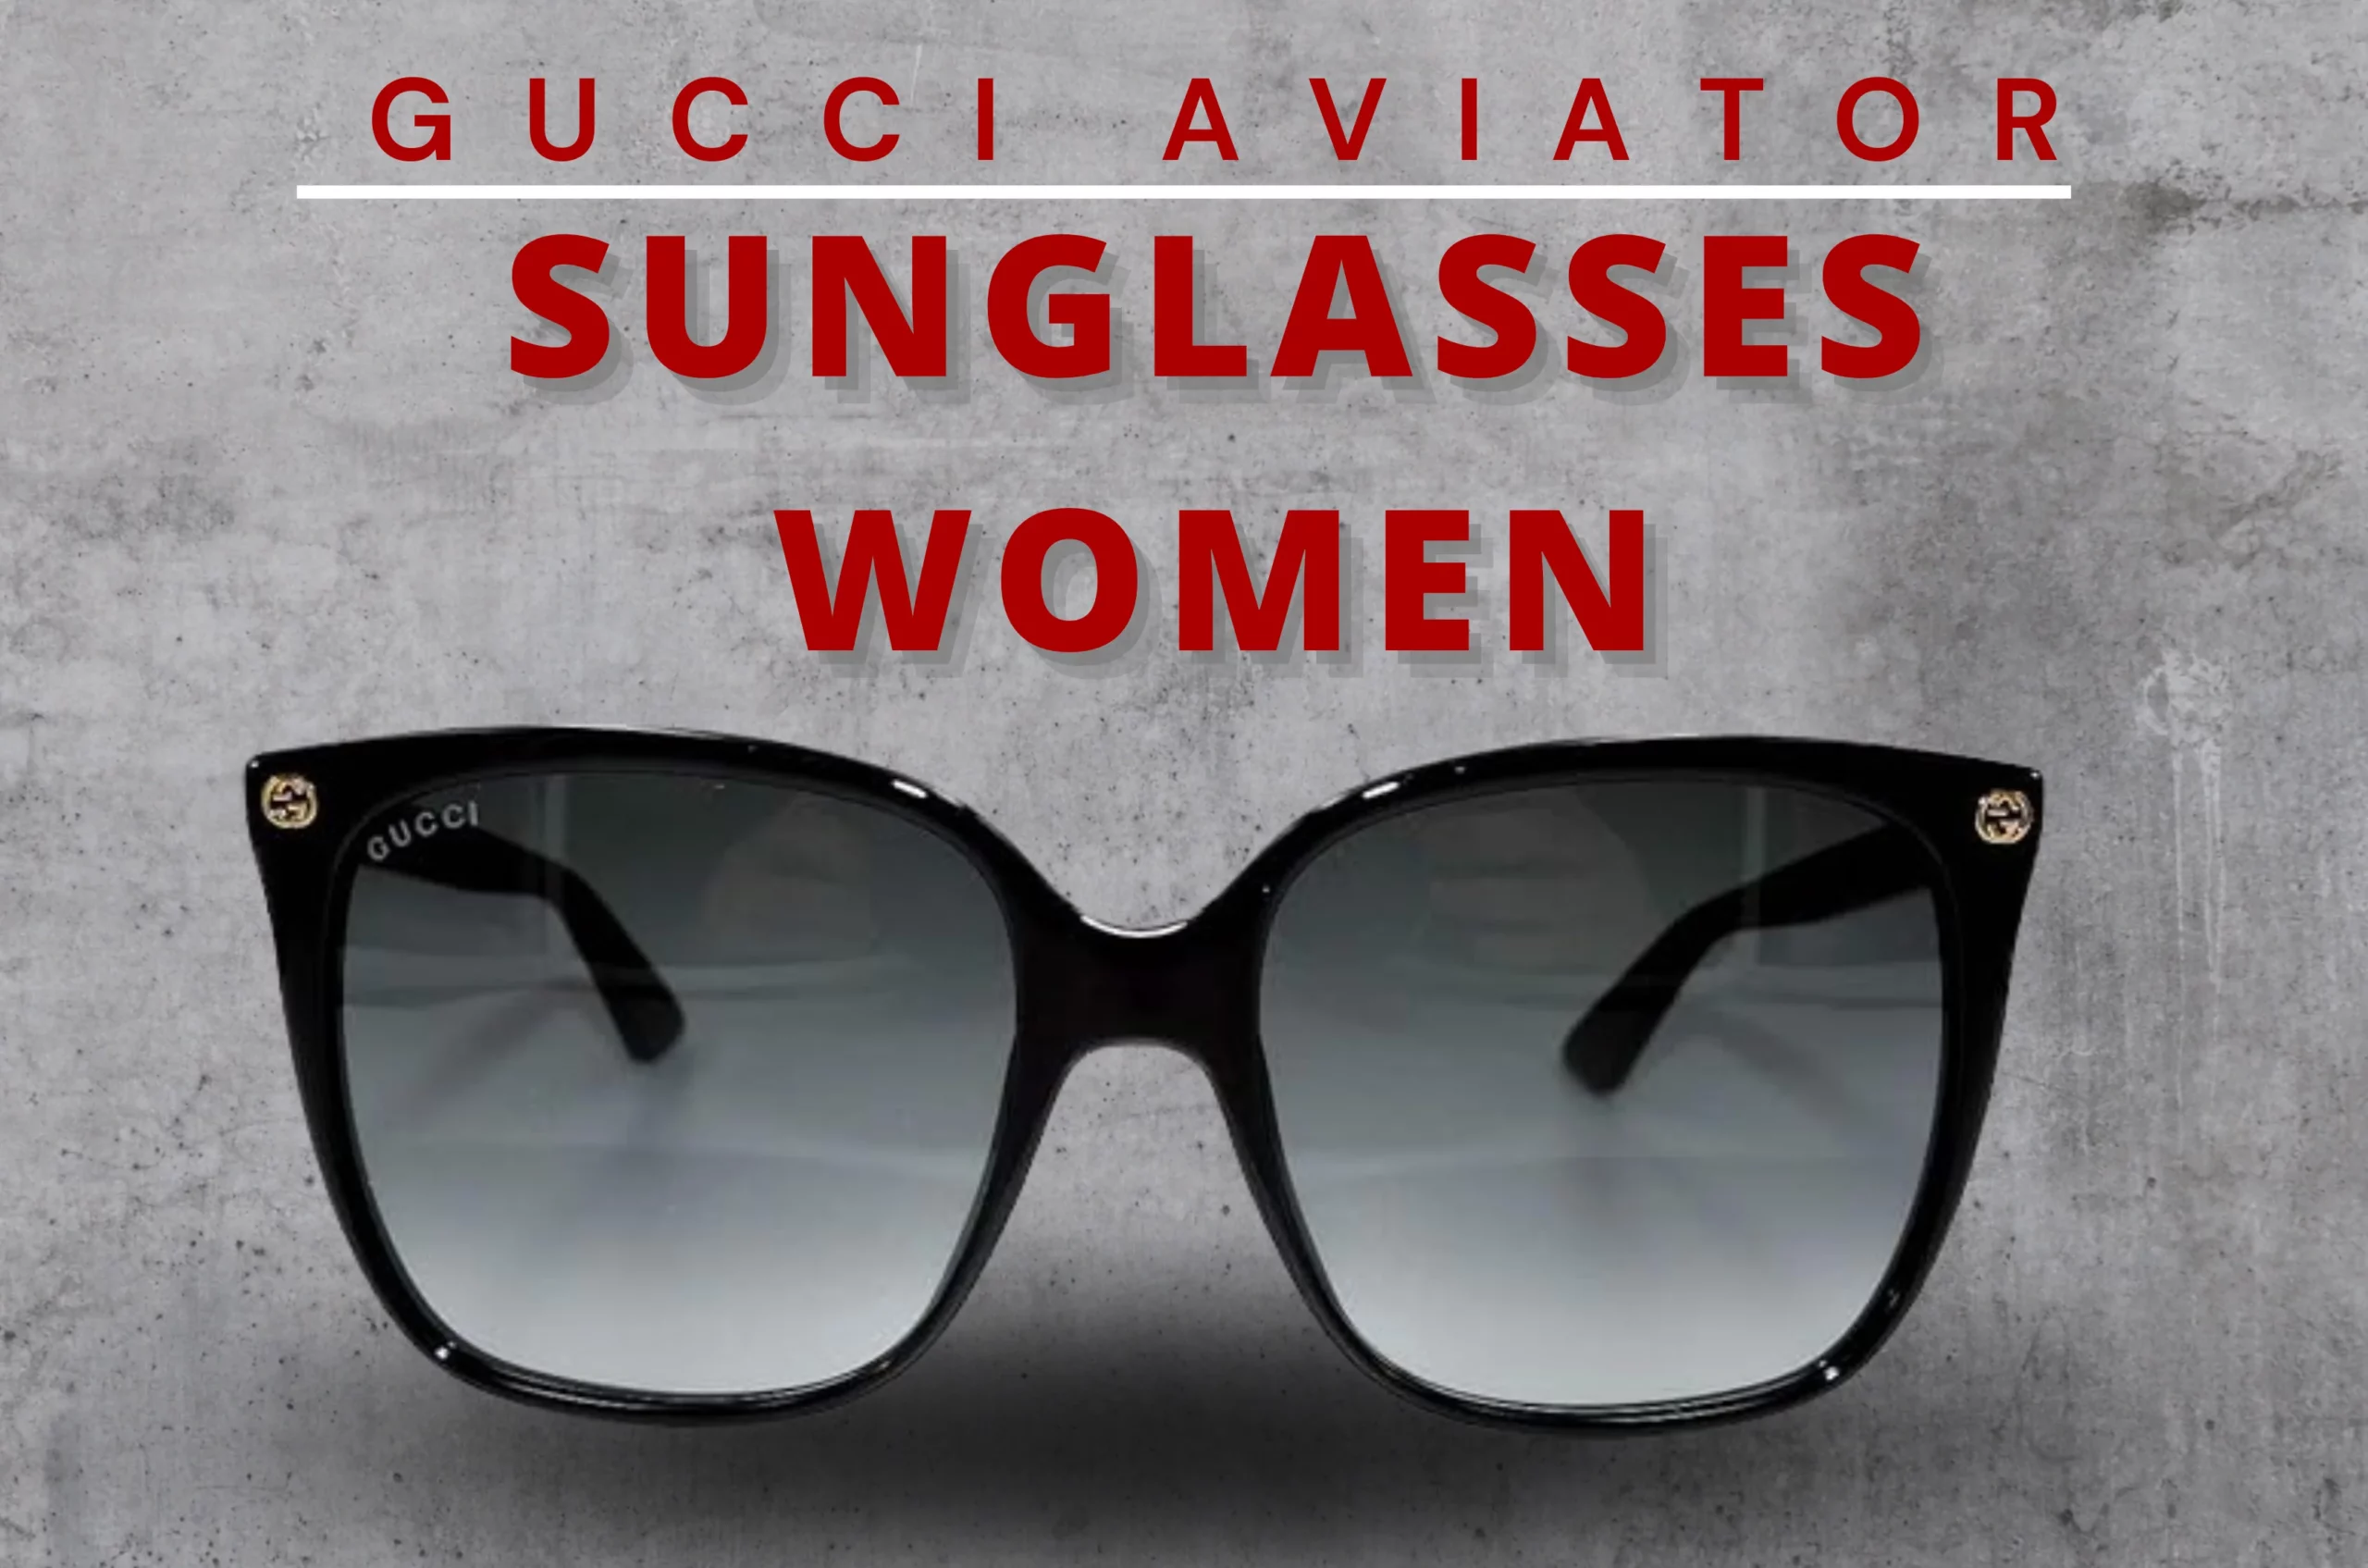 gucci aviator sunglasses women